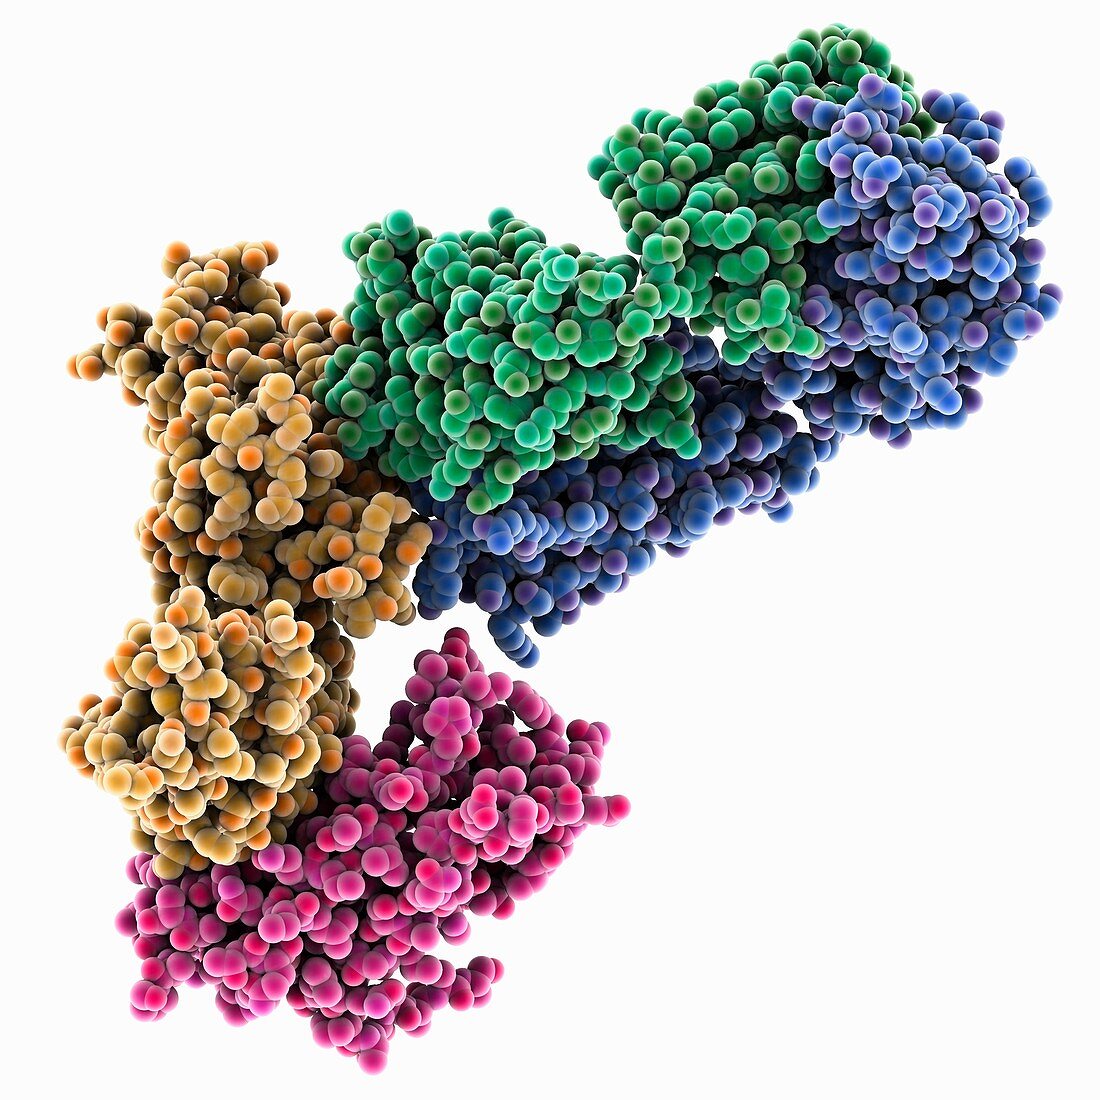 Interleukin-Briakinumab complex, molecular model